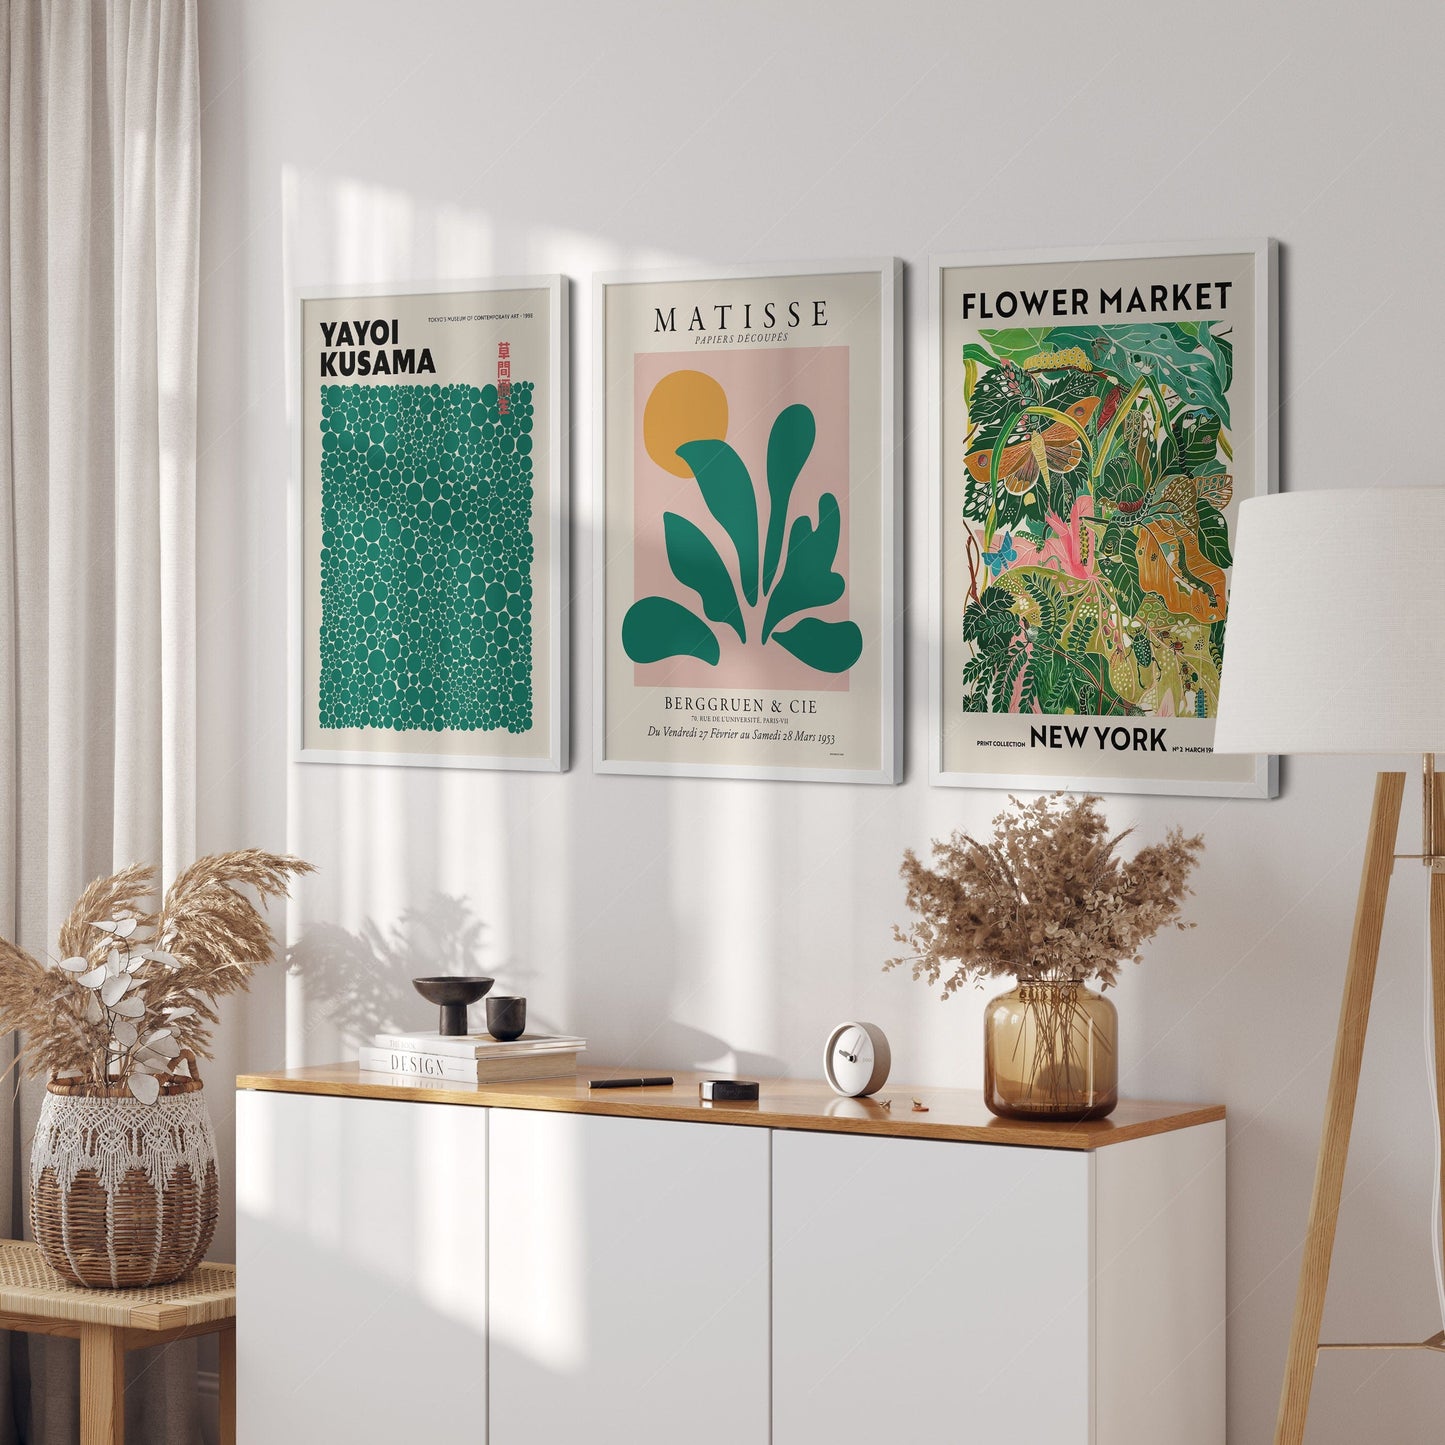 Home Poster Decor Henri Matisse, Modern Gallery Wall, Set of 3 Prints, Henri Matisse, Yayoi Kusama, Flower Market New York